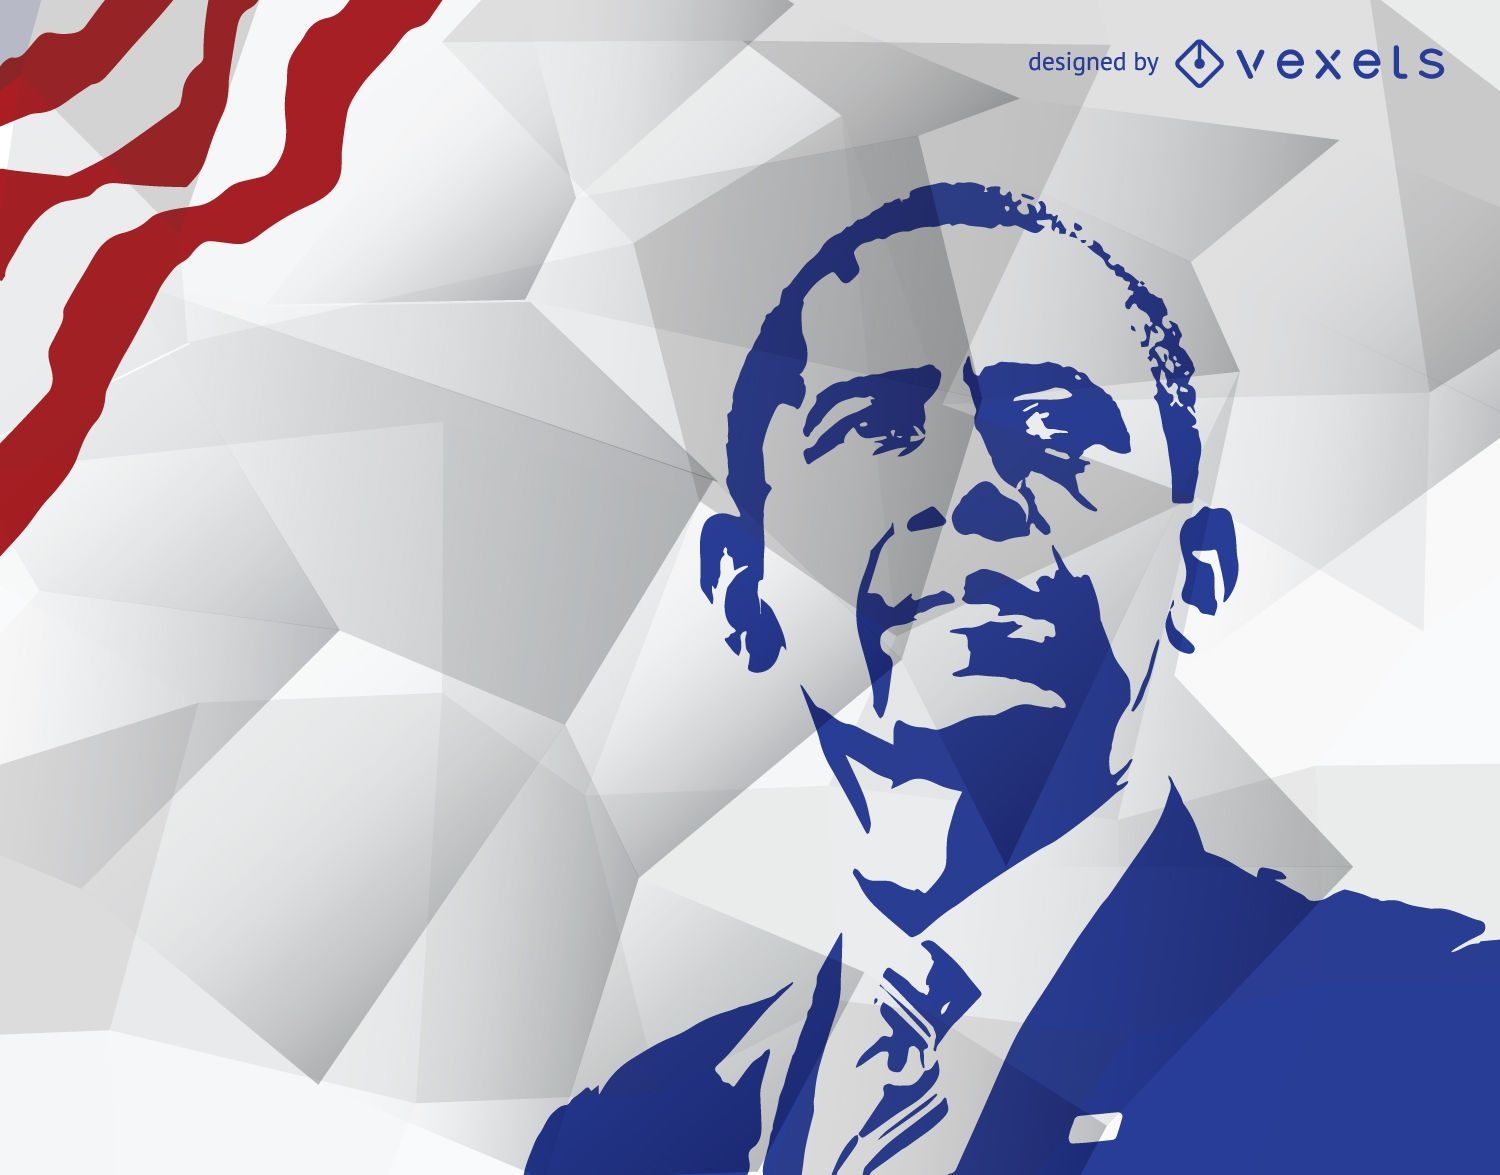 Obama's stencil in blue